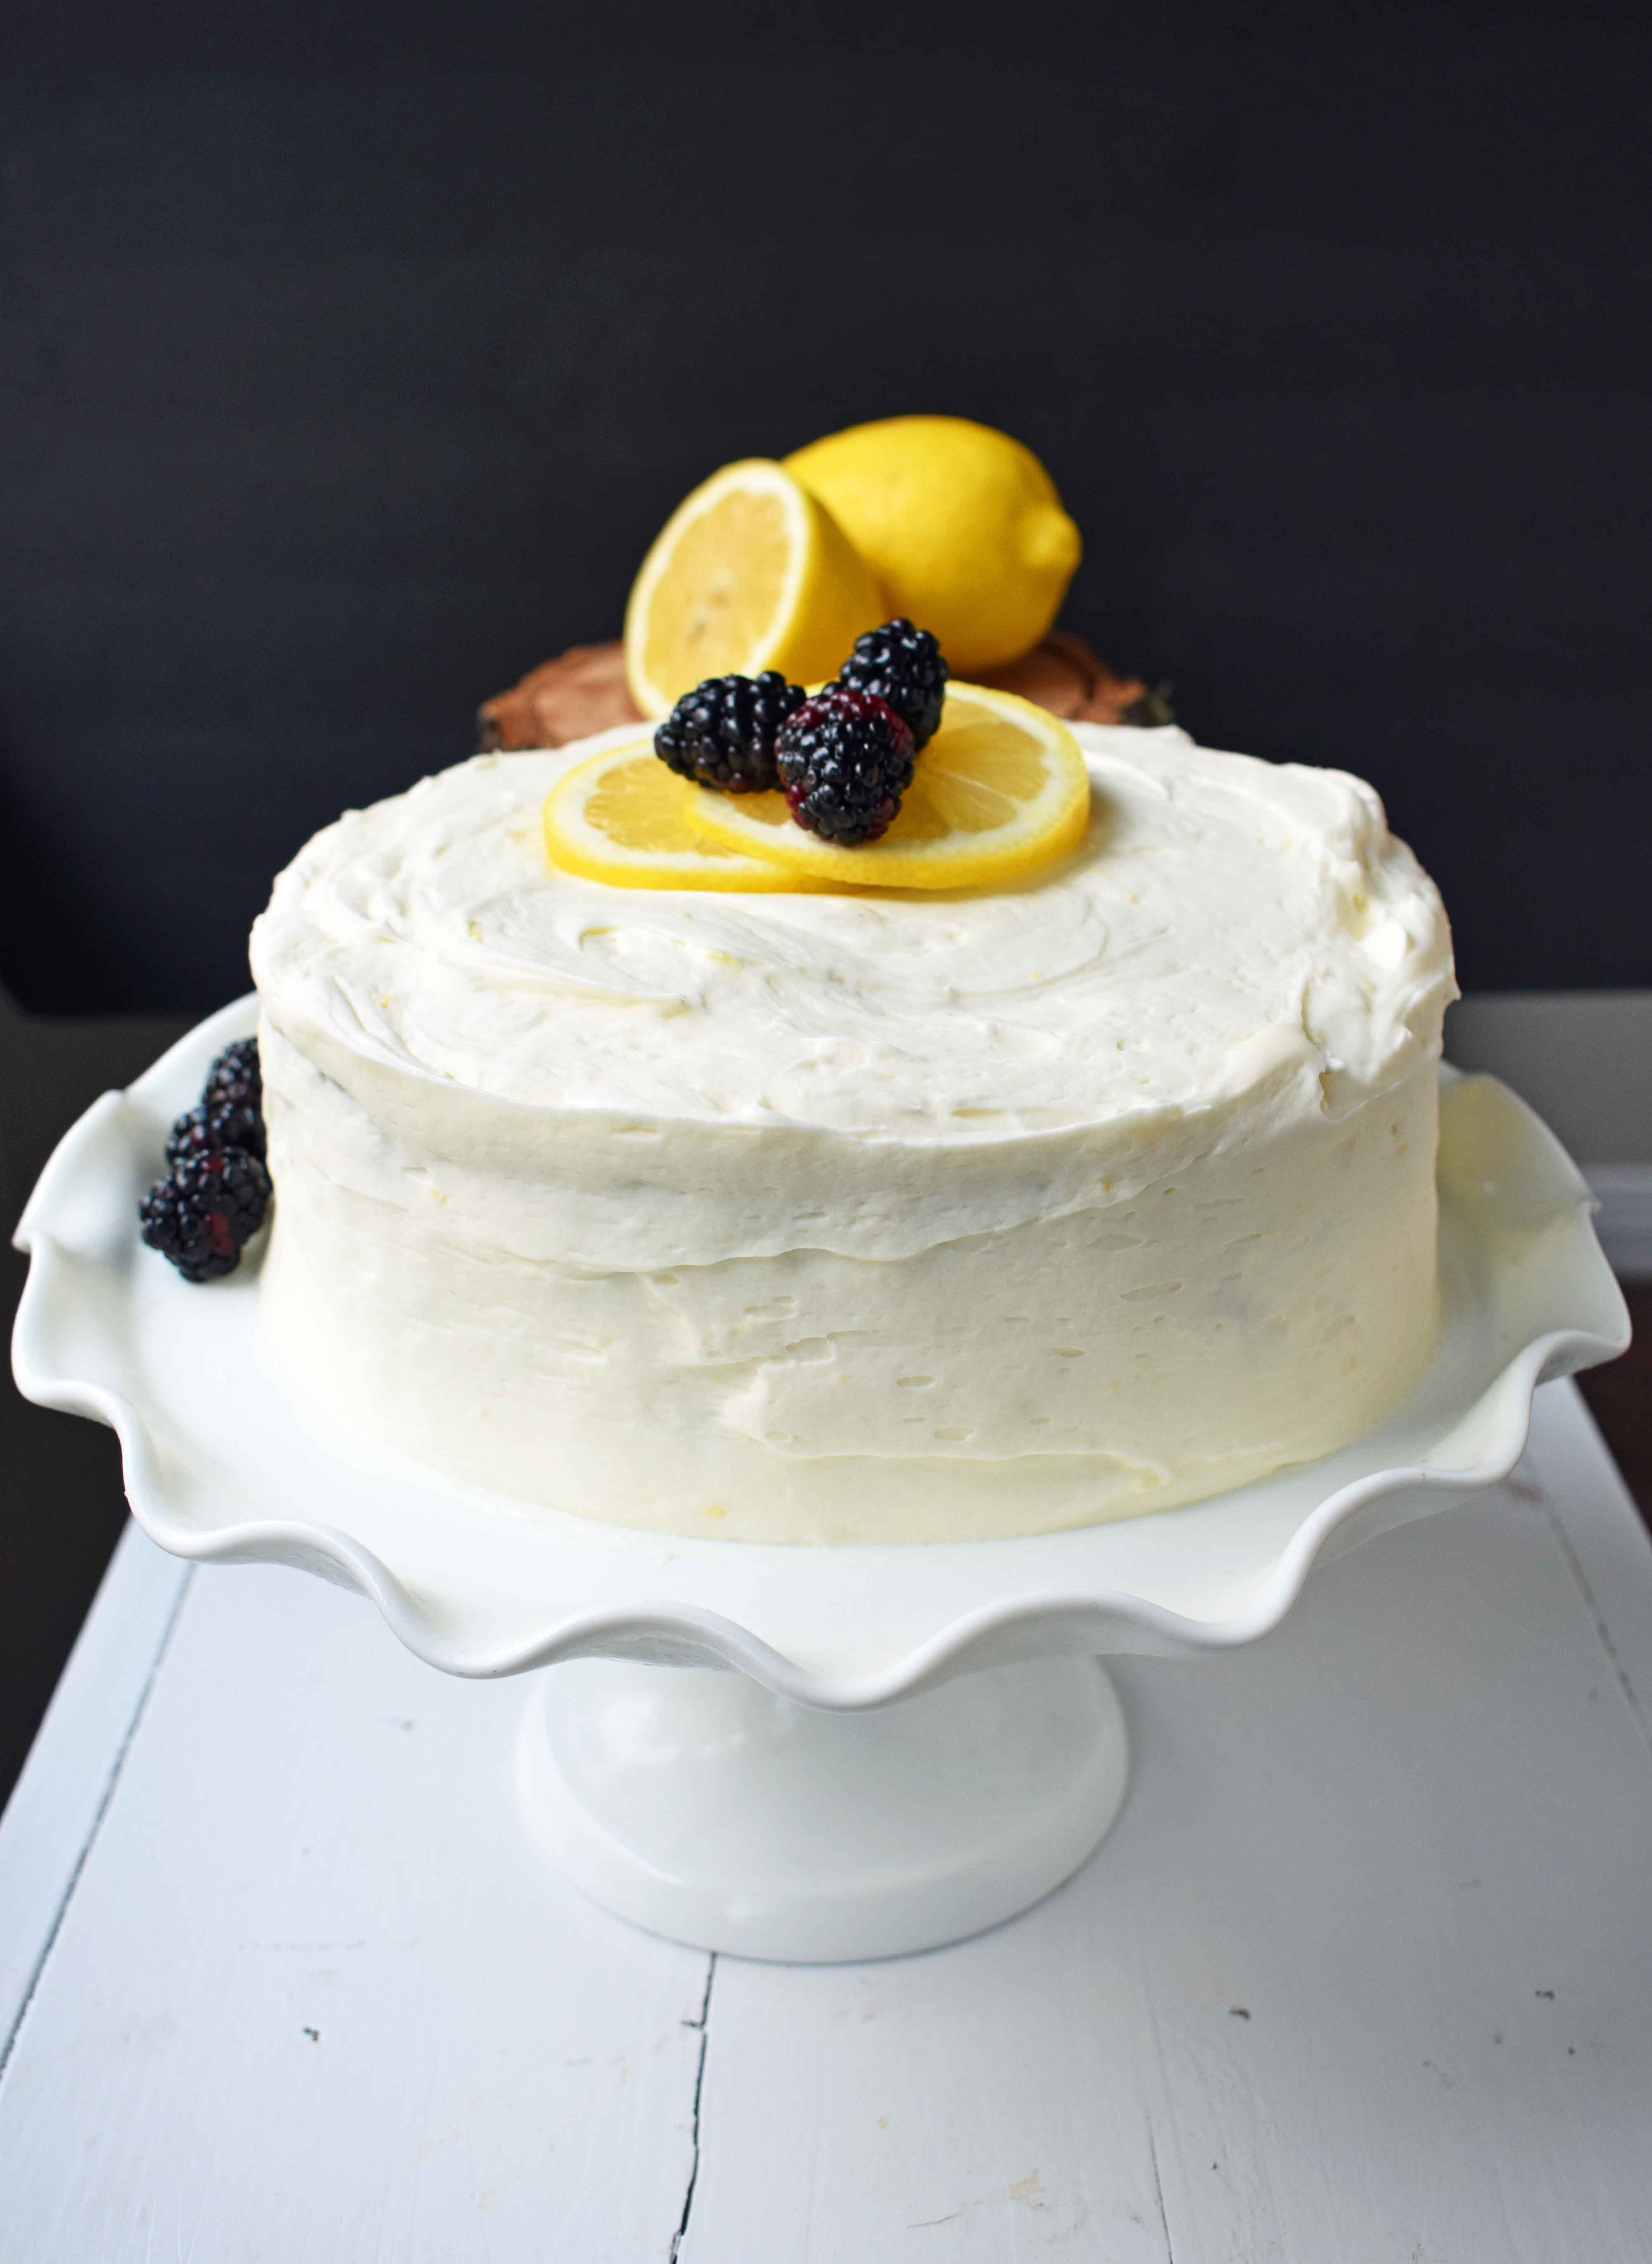 Lemon Birthday Cake